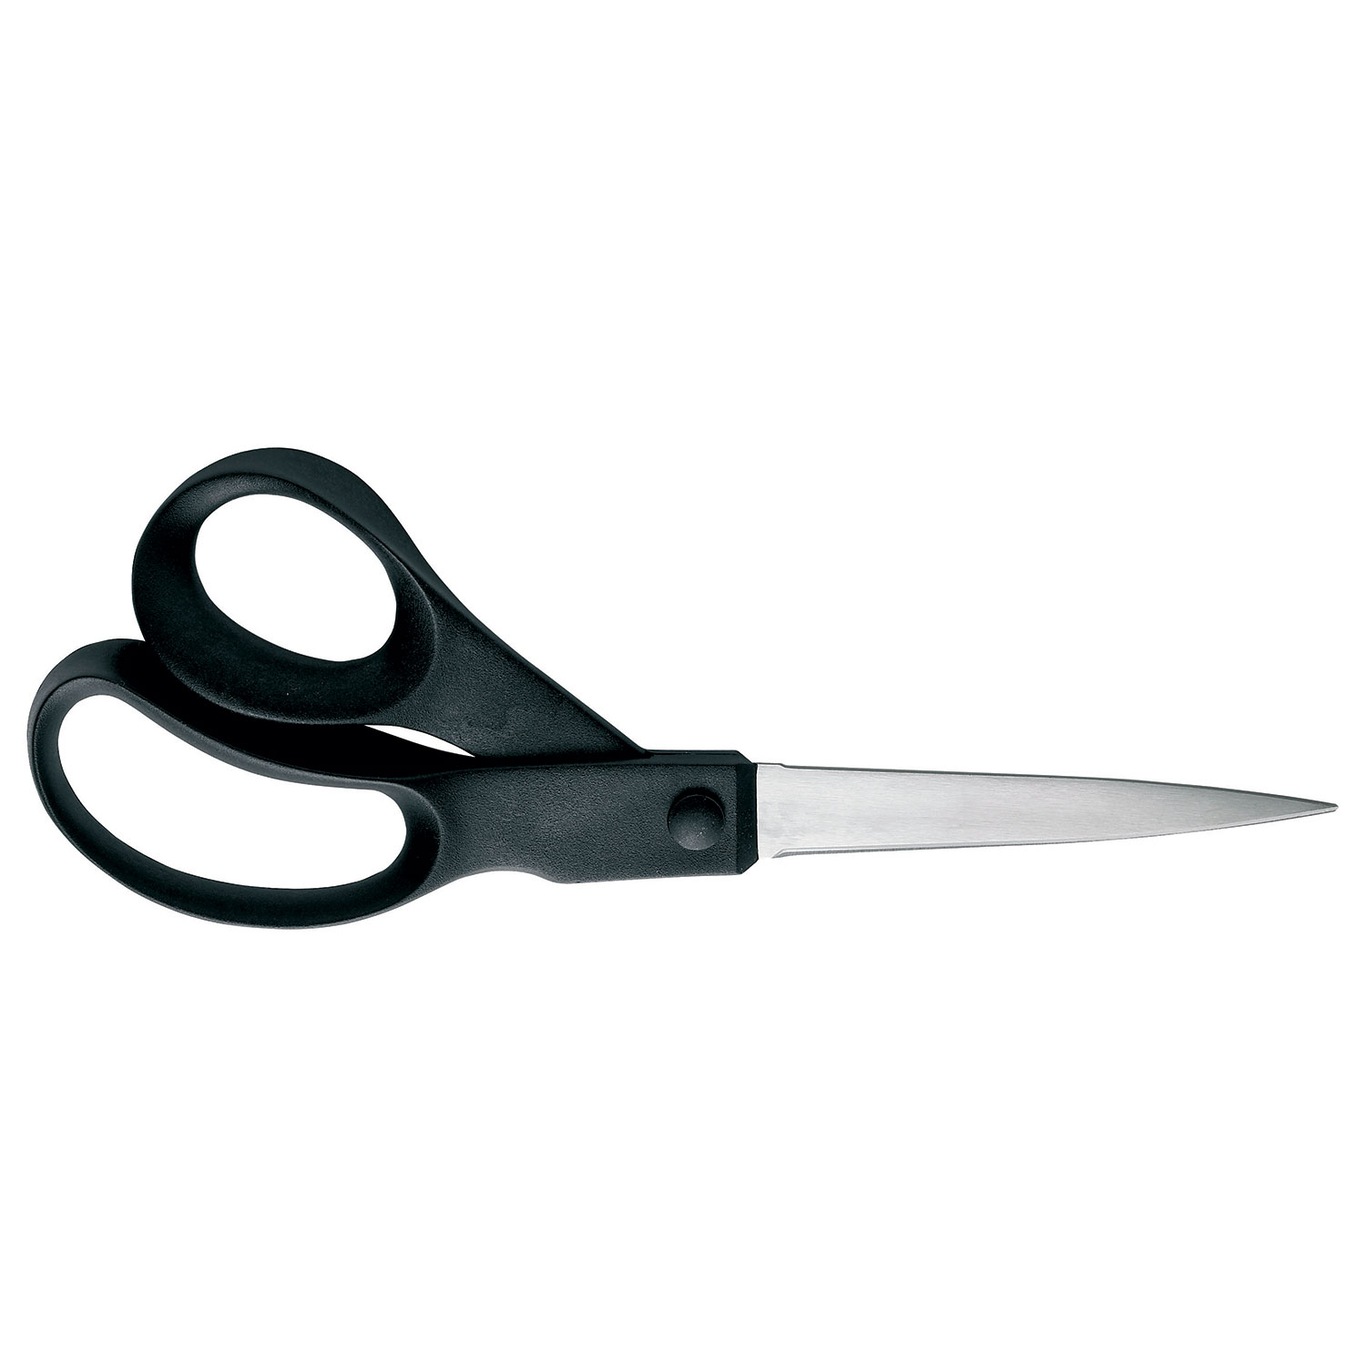 21 & 24 cm Fiskars Universal Functional Form Scissors Black or White Handle 17 